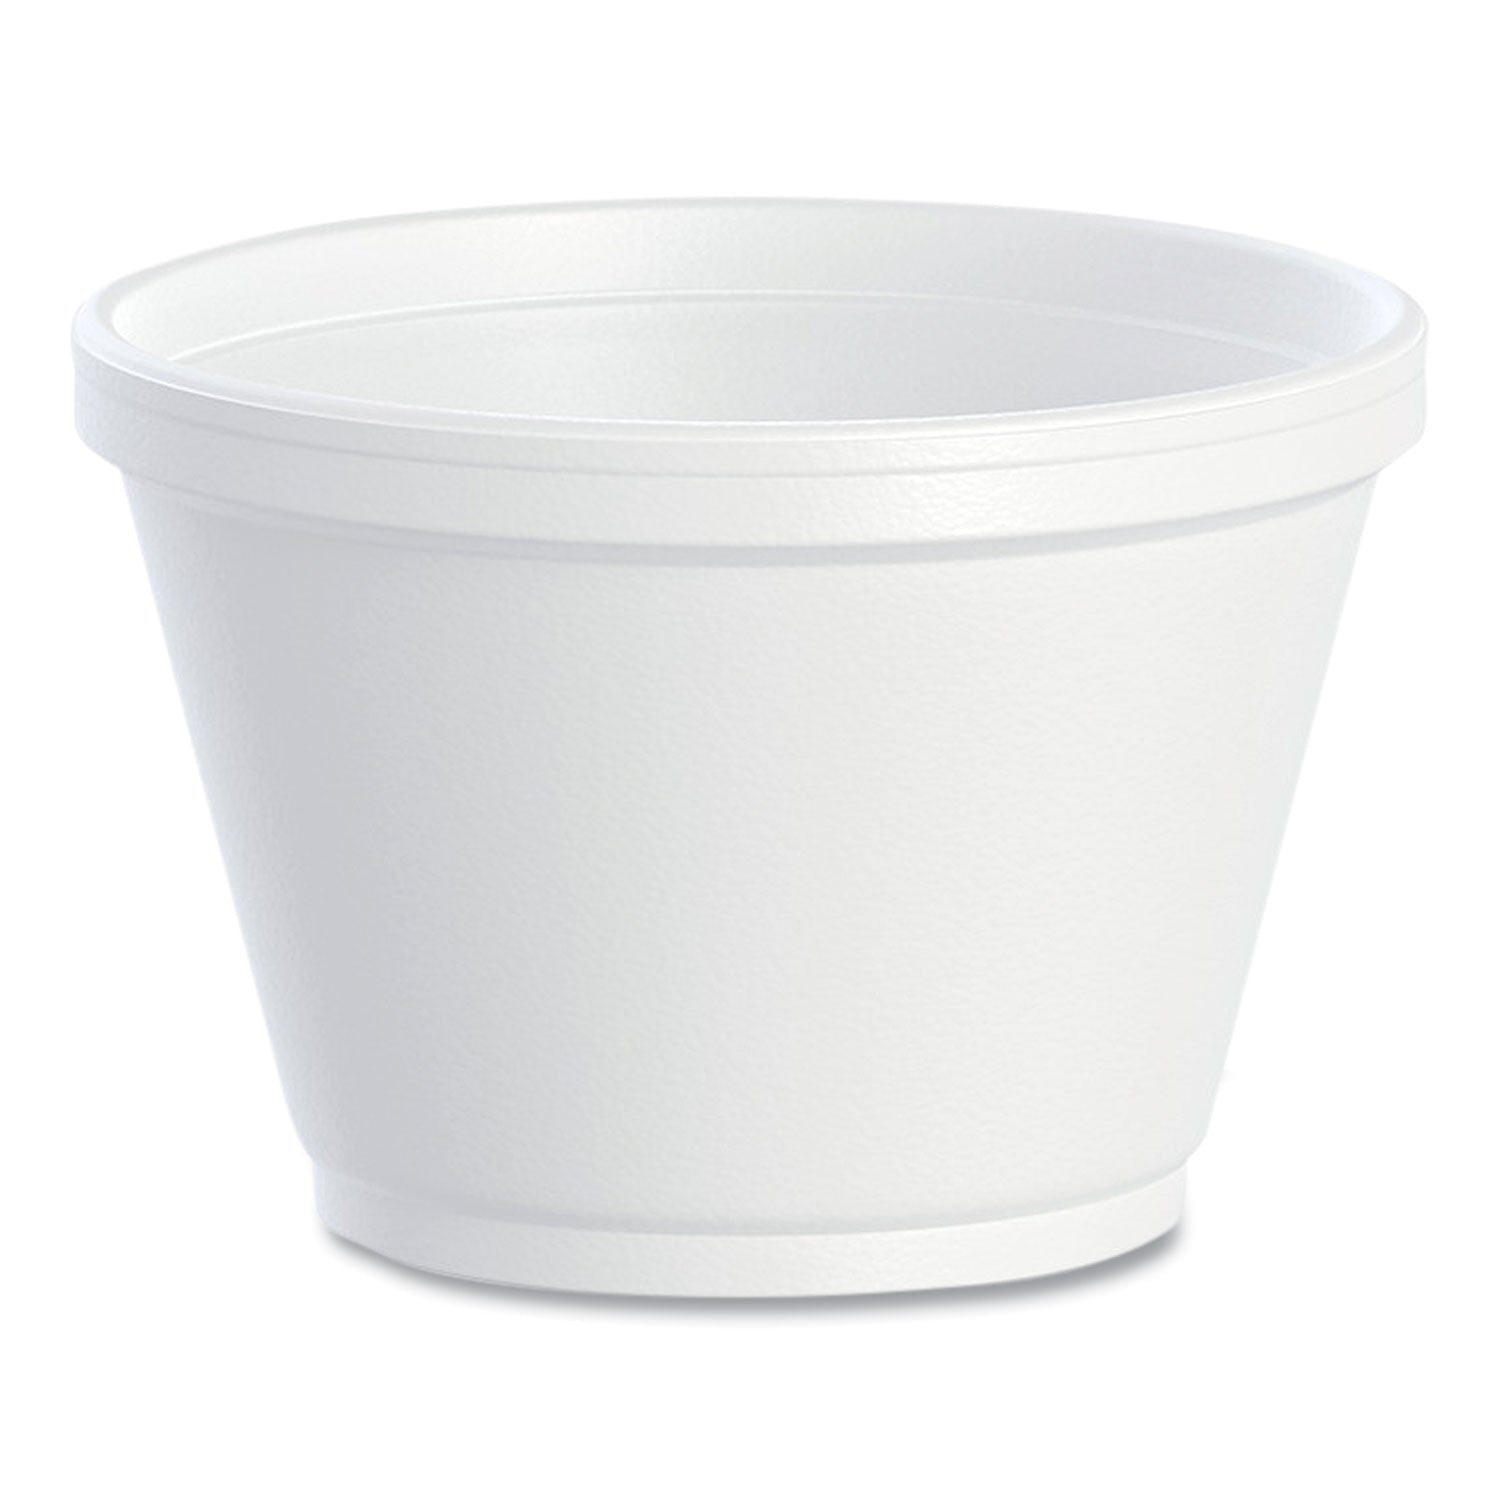 Foam Containers, 6 oz, White, 50/Bag, 20 Bags/Carton - 